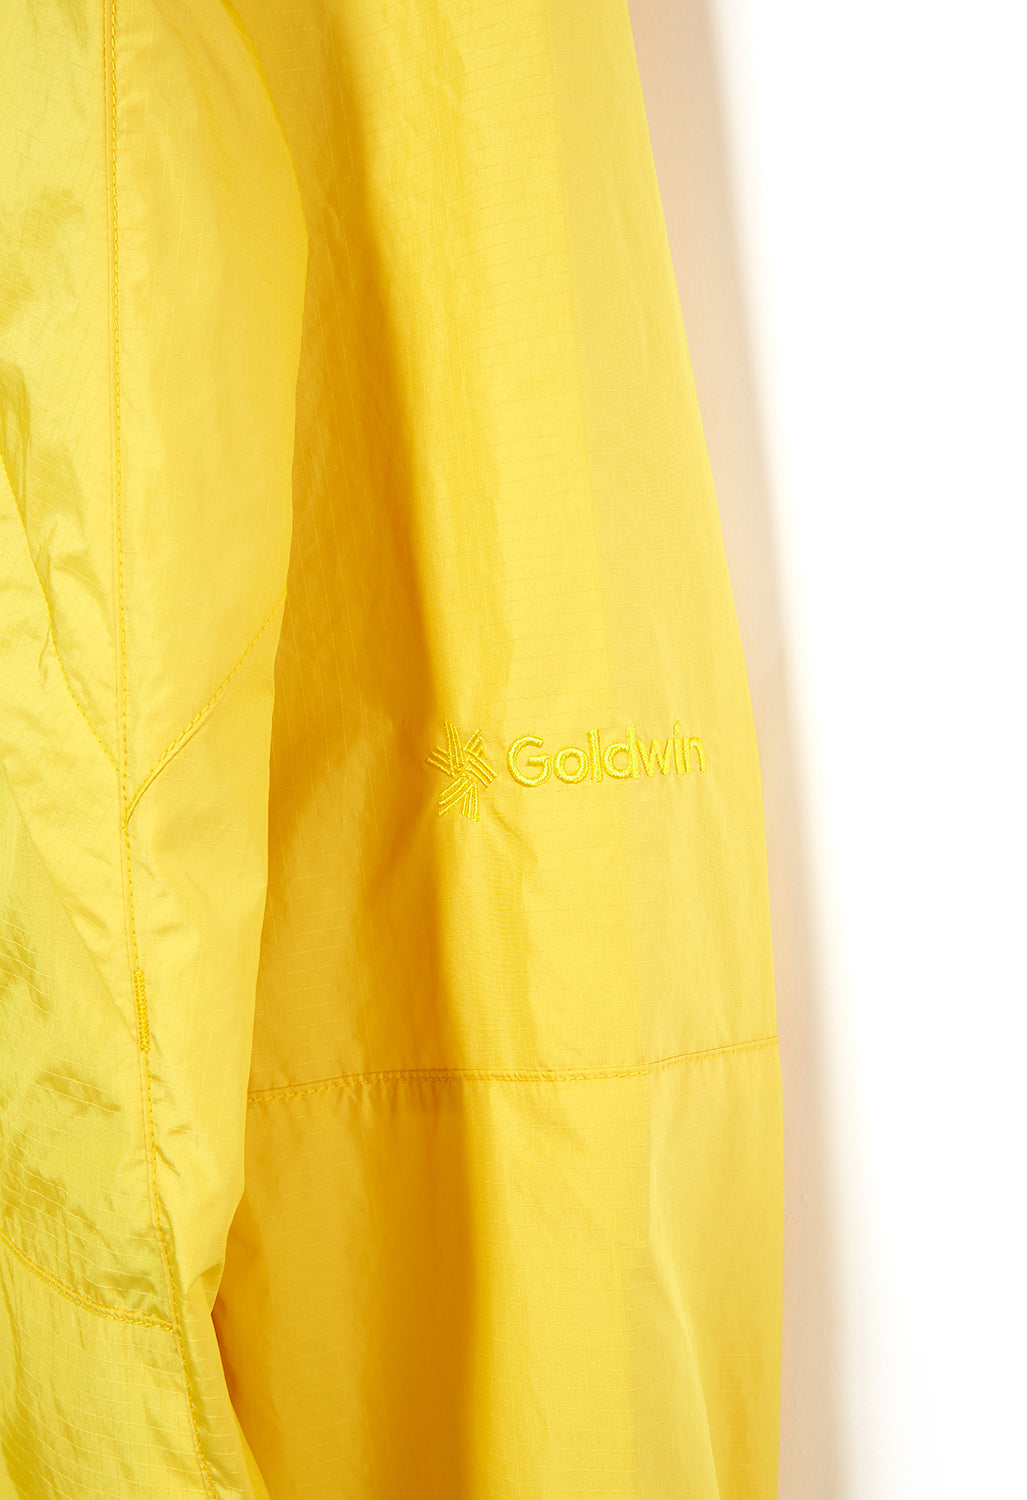 Goldwin Men's Rip-Stop Light Jacket - Bright Yellow – Outsiders Store UK